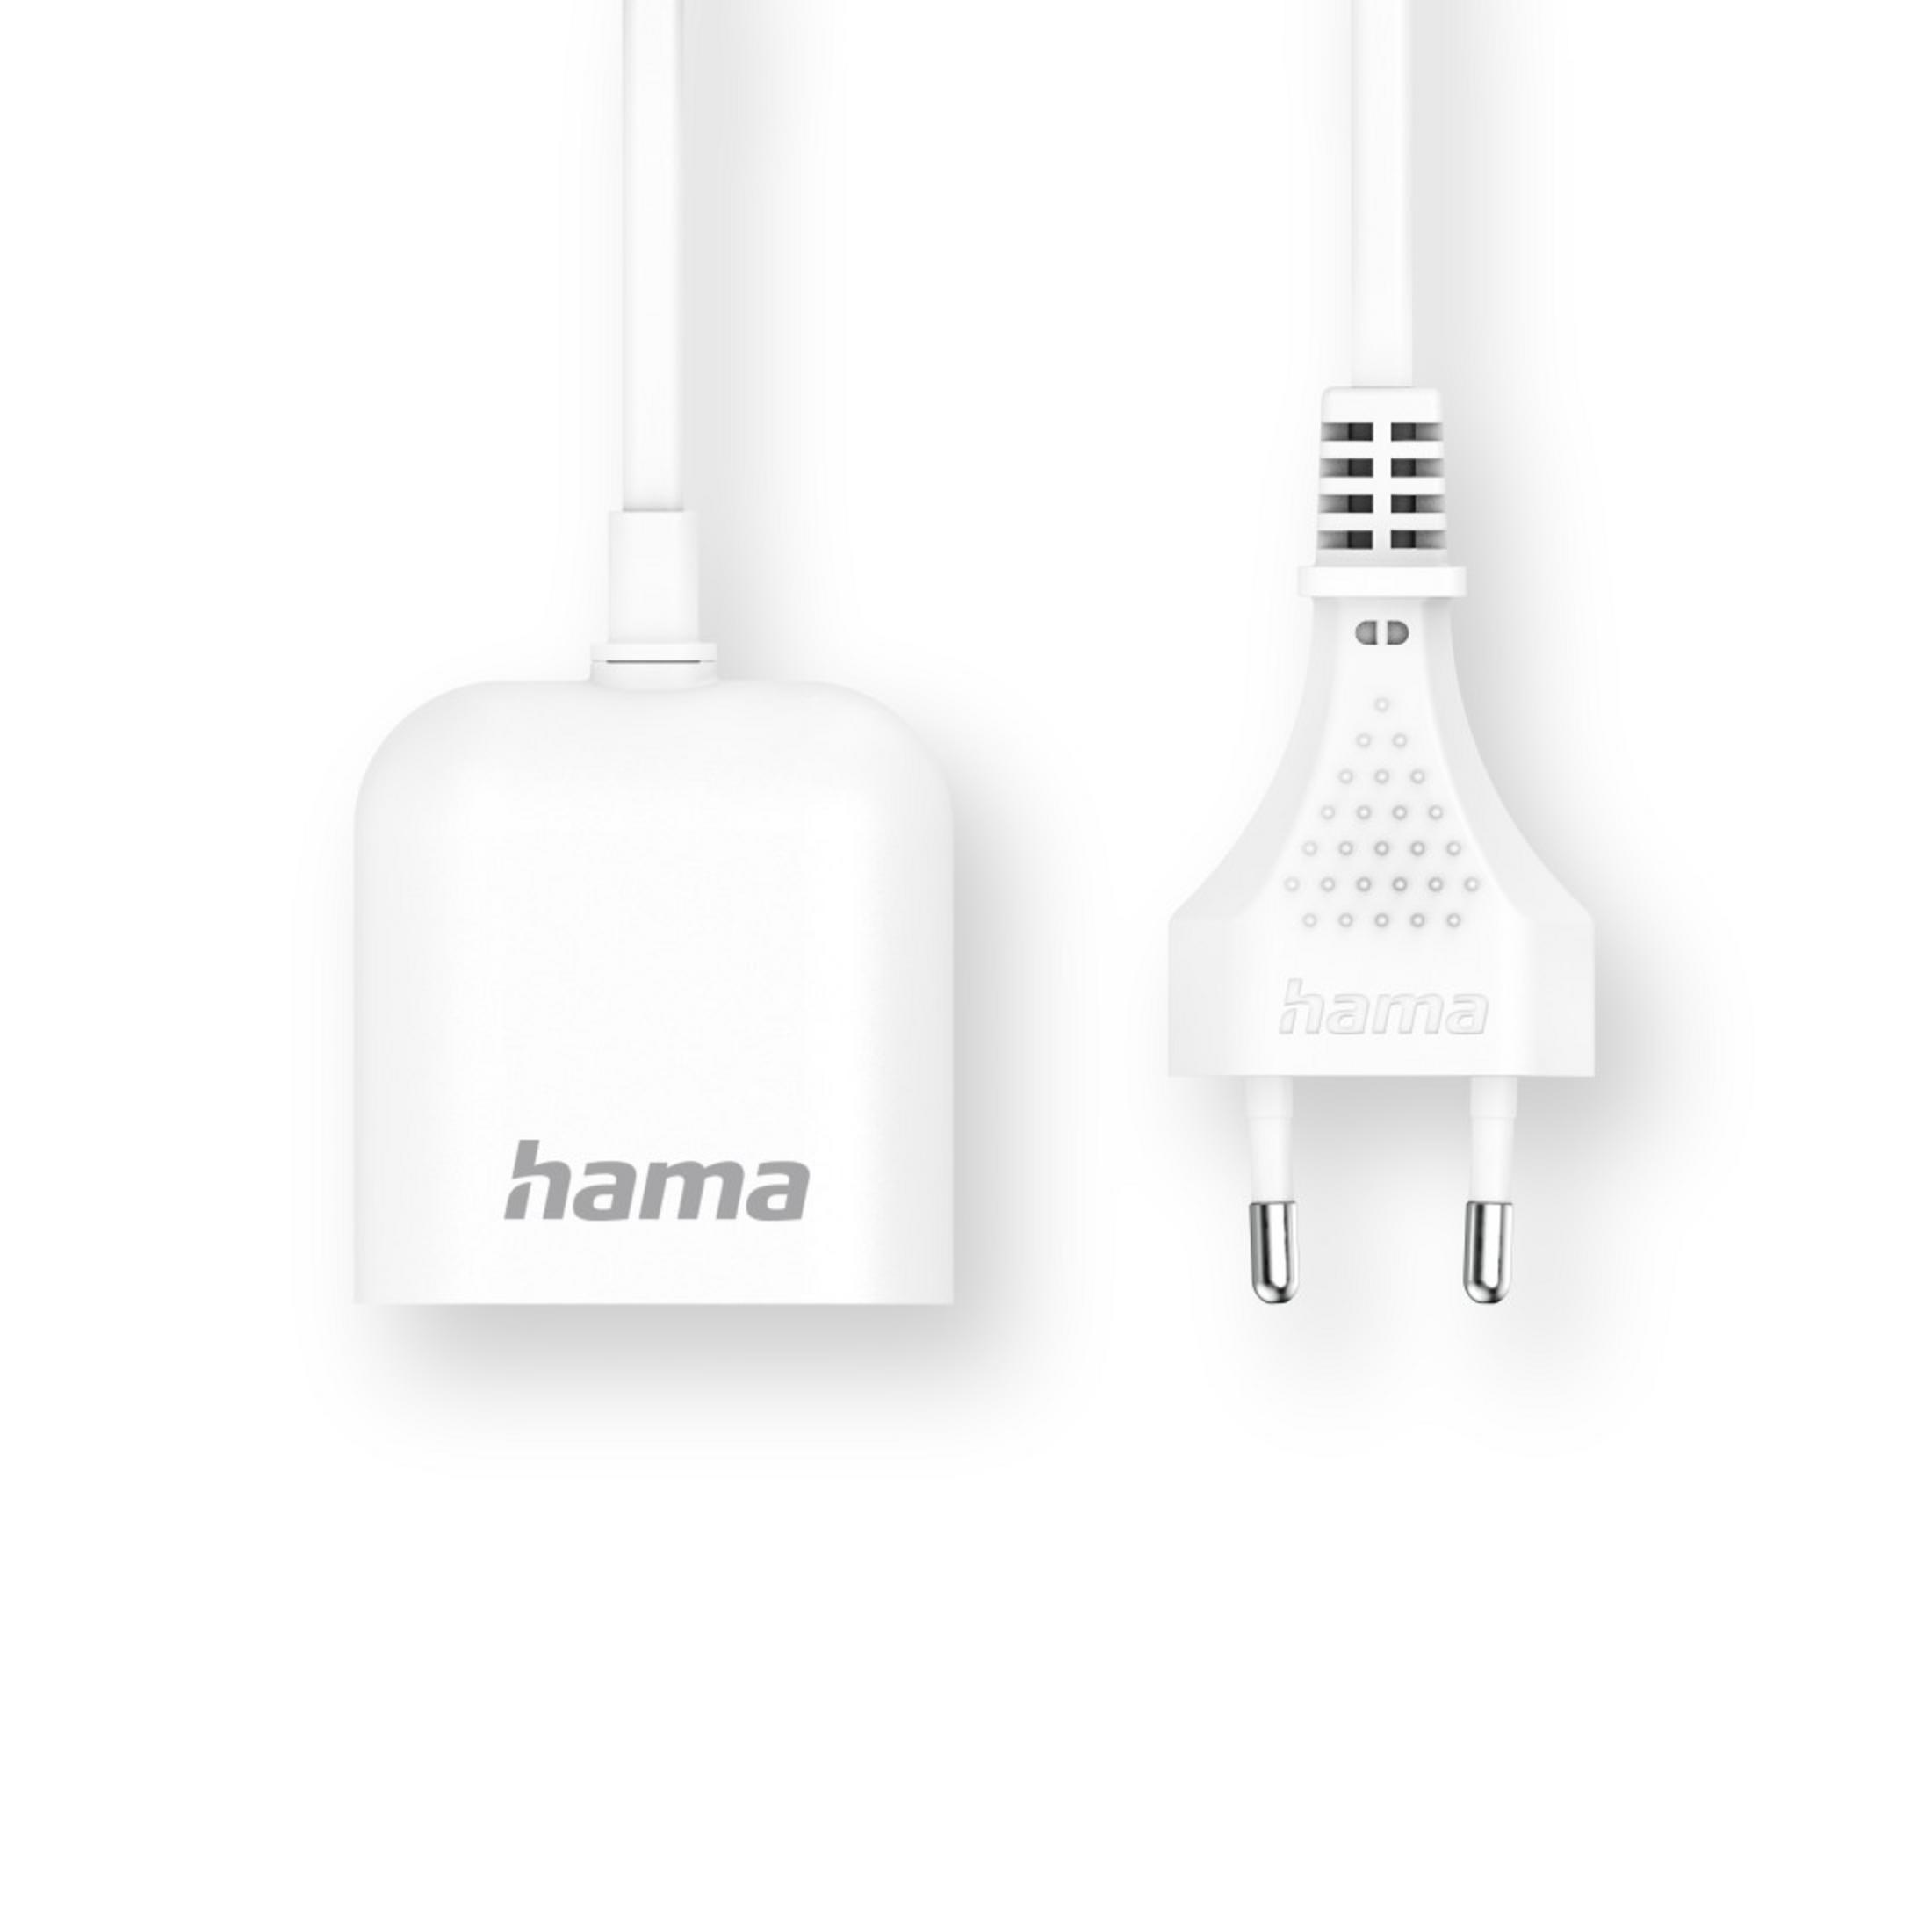 HAMA 2x USB-A Universell, Weiß Ladegerät